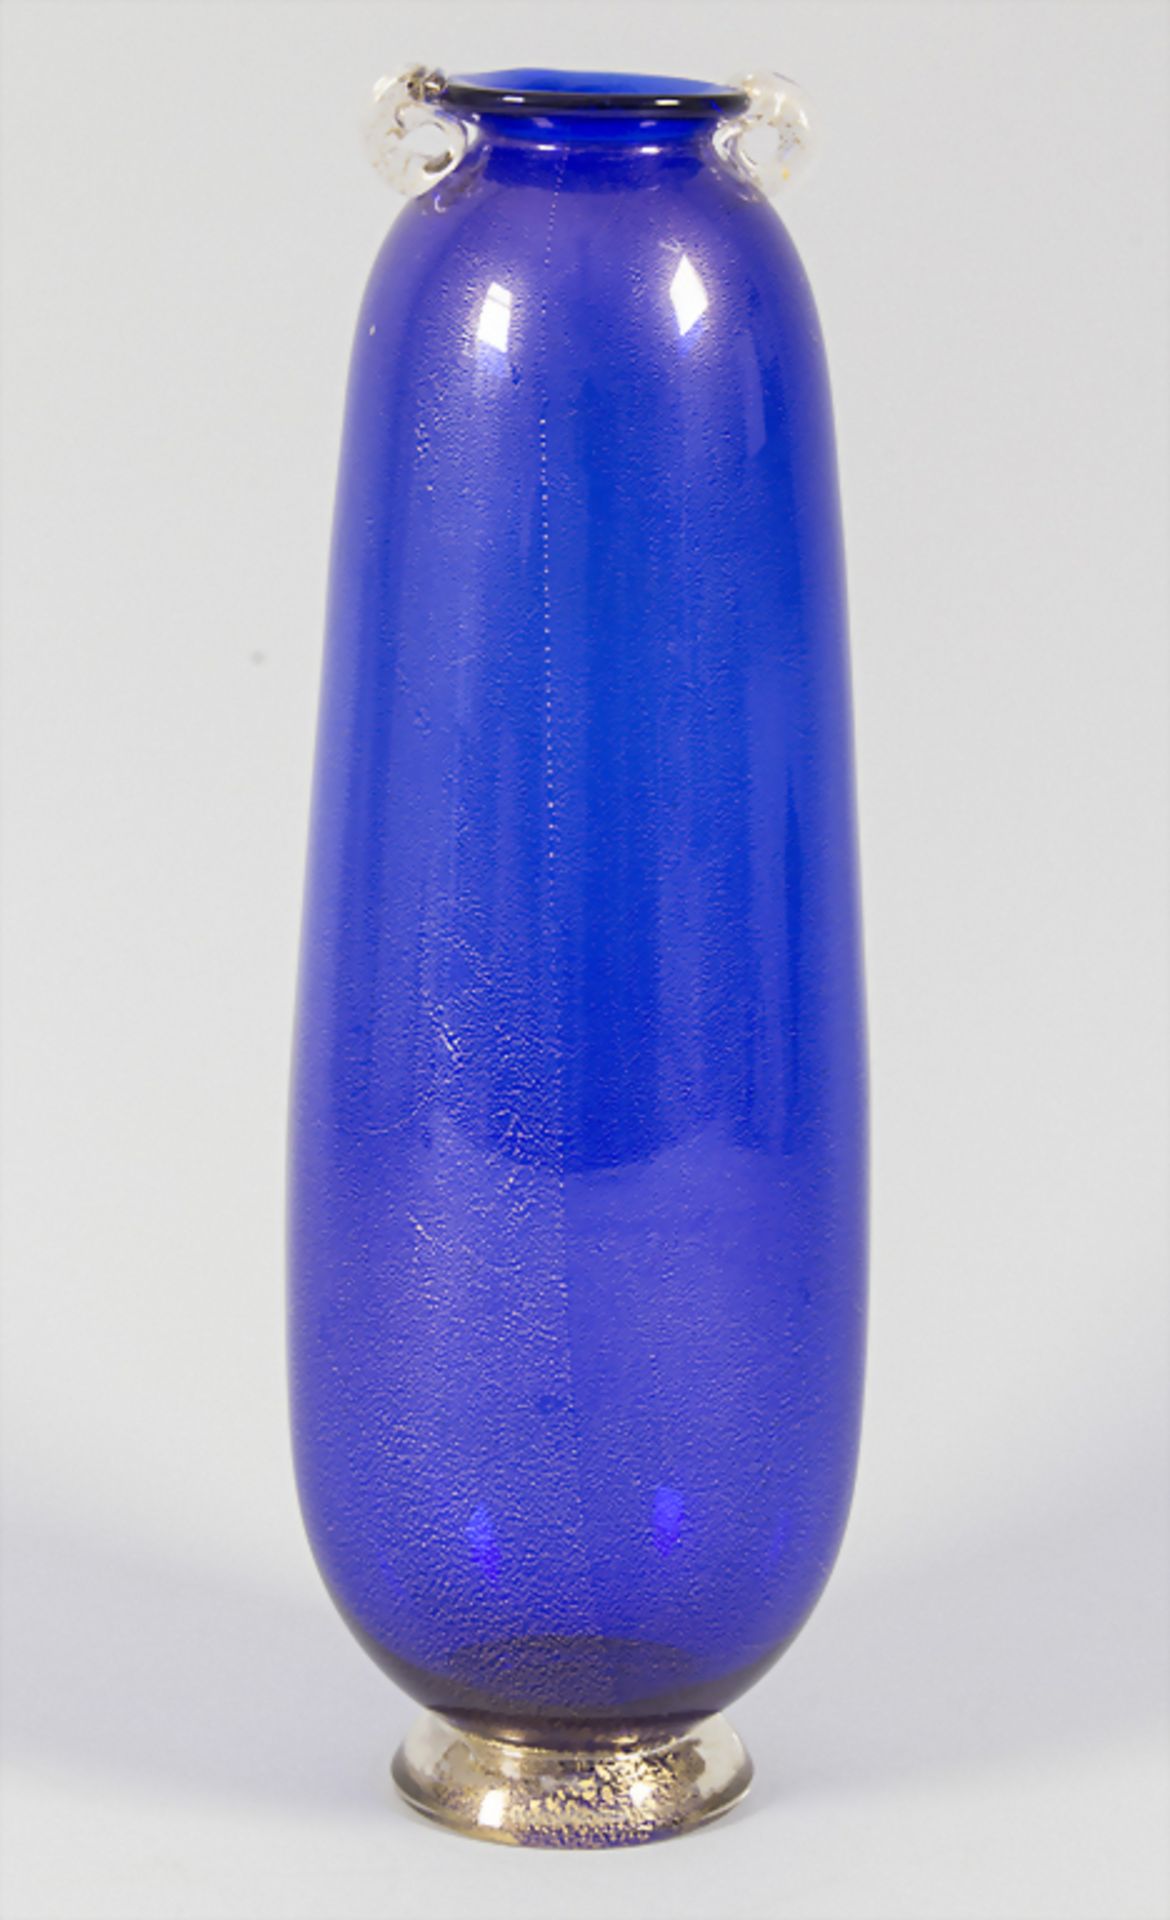 Glasziervase / A decorative glass vase, wohl AVEM (Arte Vetraria Muranese), Murano, 40/50er Jahr - Image 3 of 6